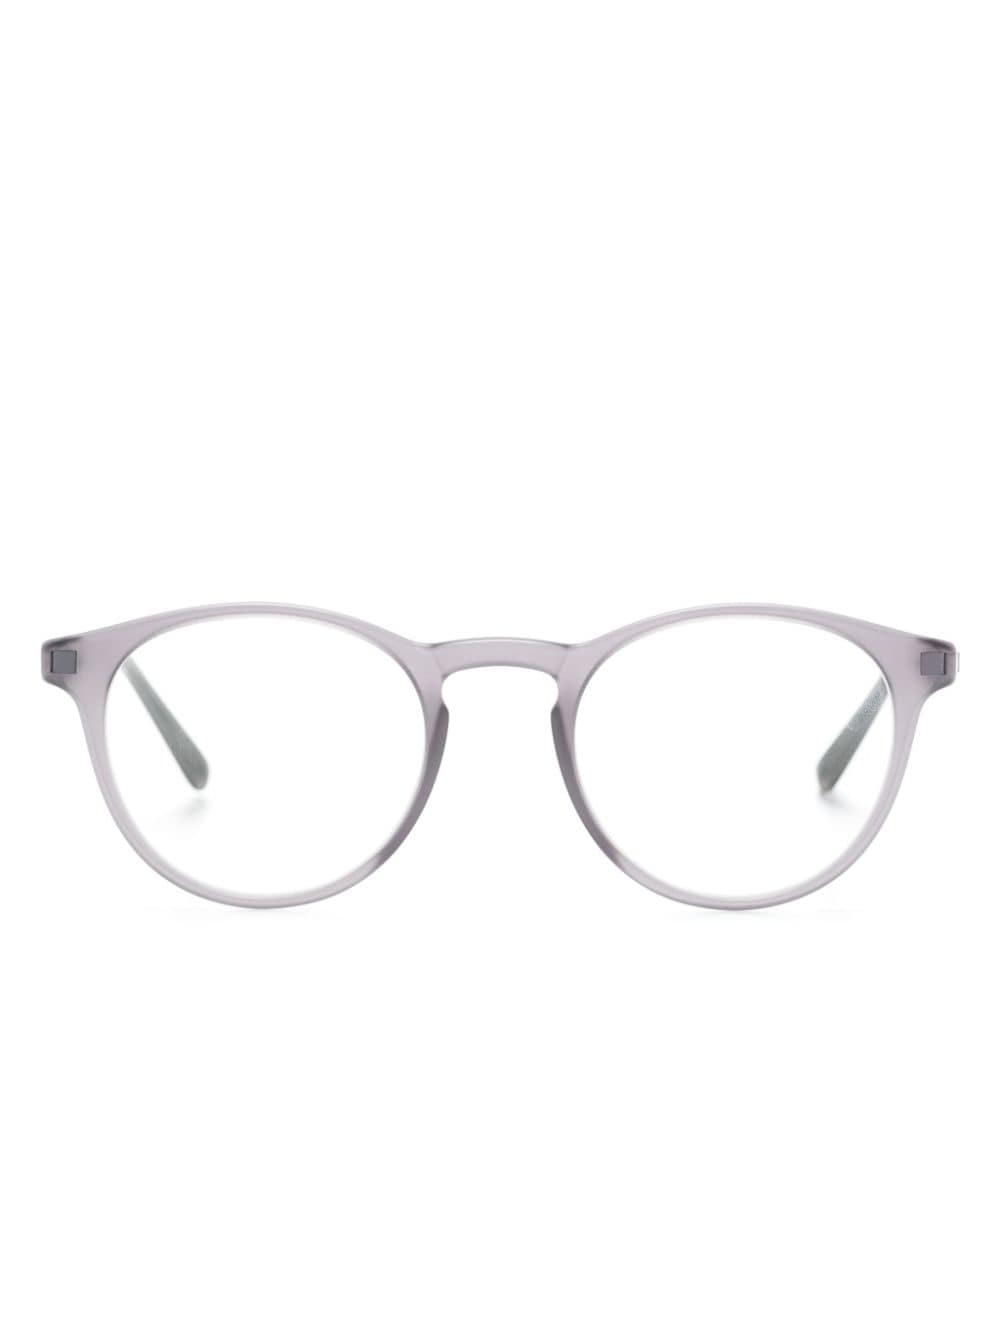 Mykita Talini clip-on lense glasses - Grigio